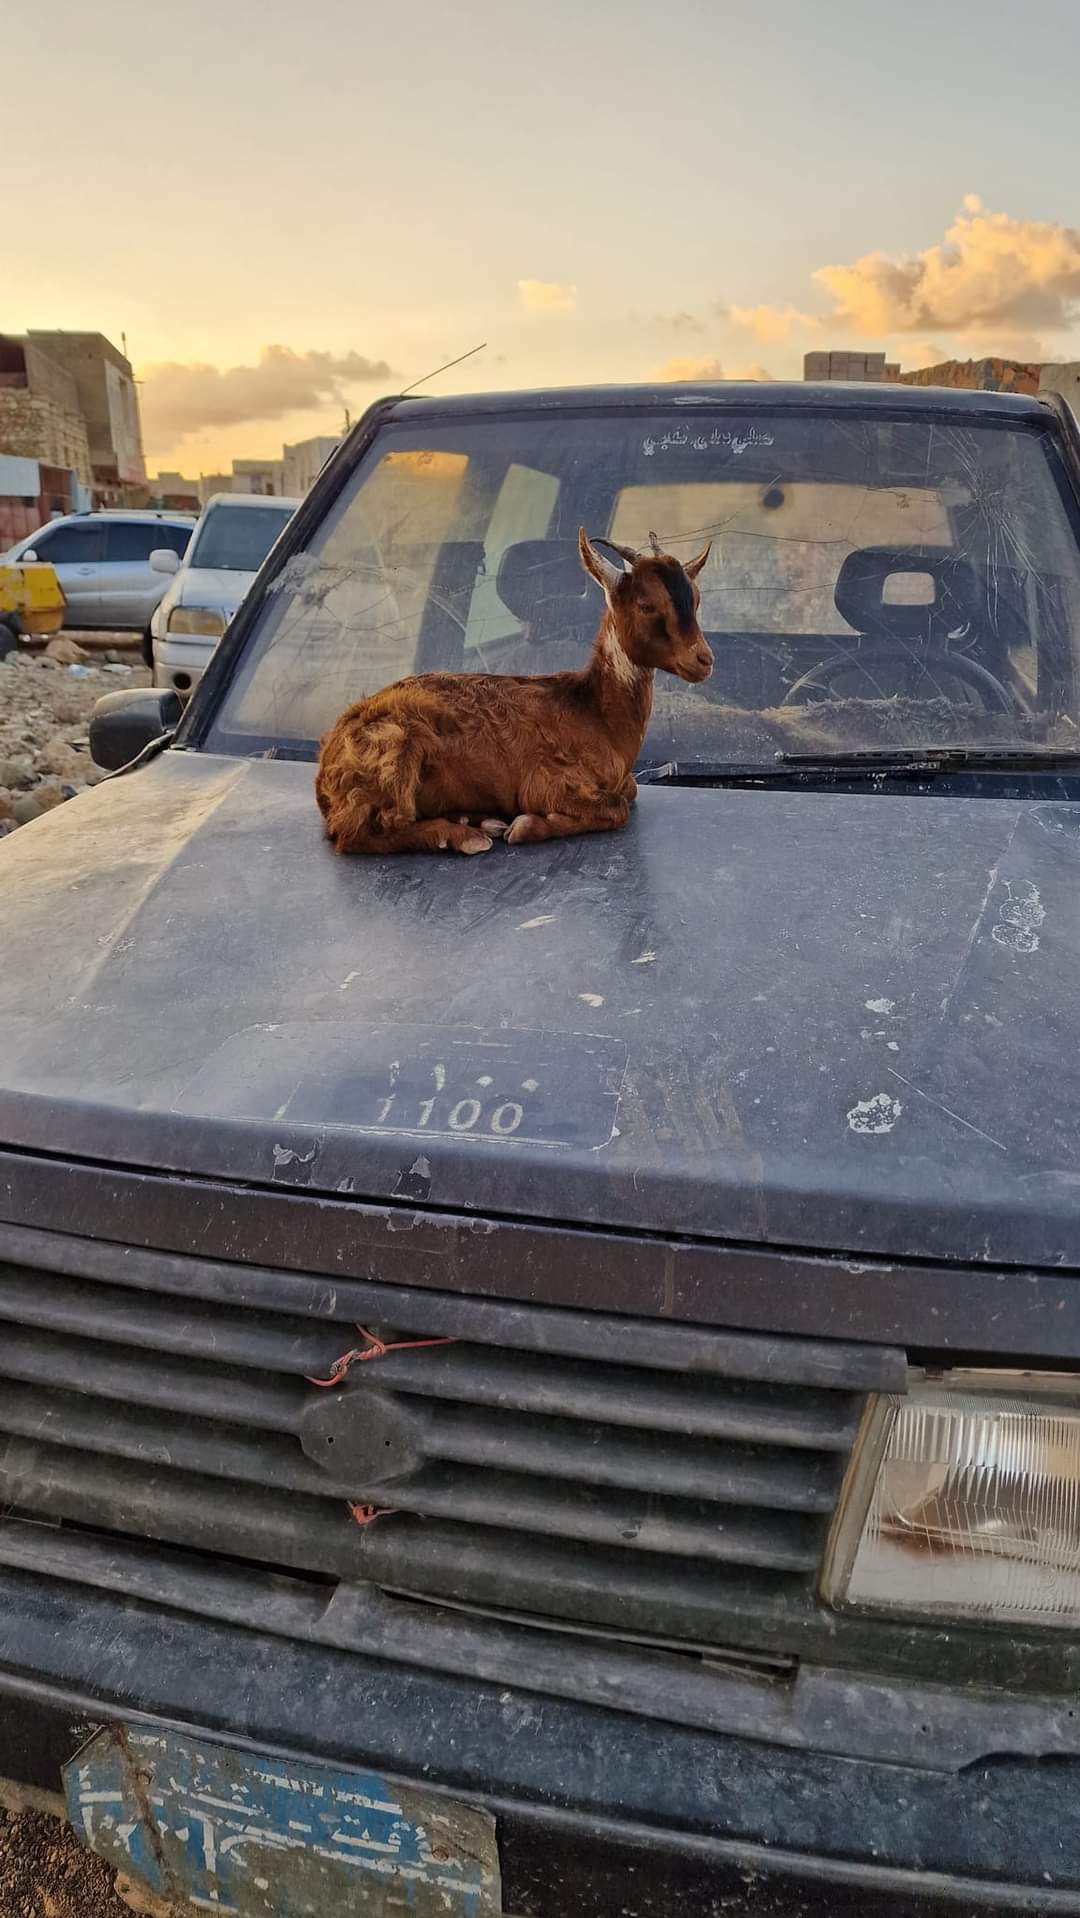 A goat sitting on a car in Socotra